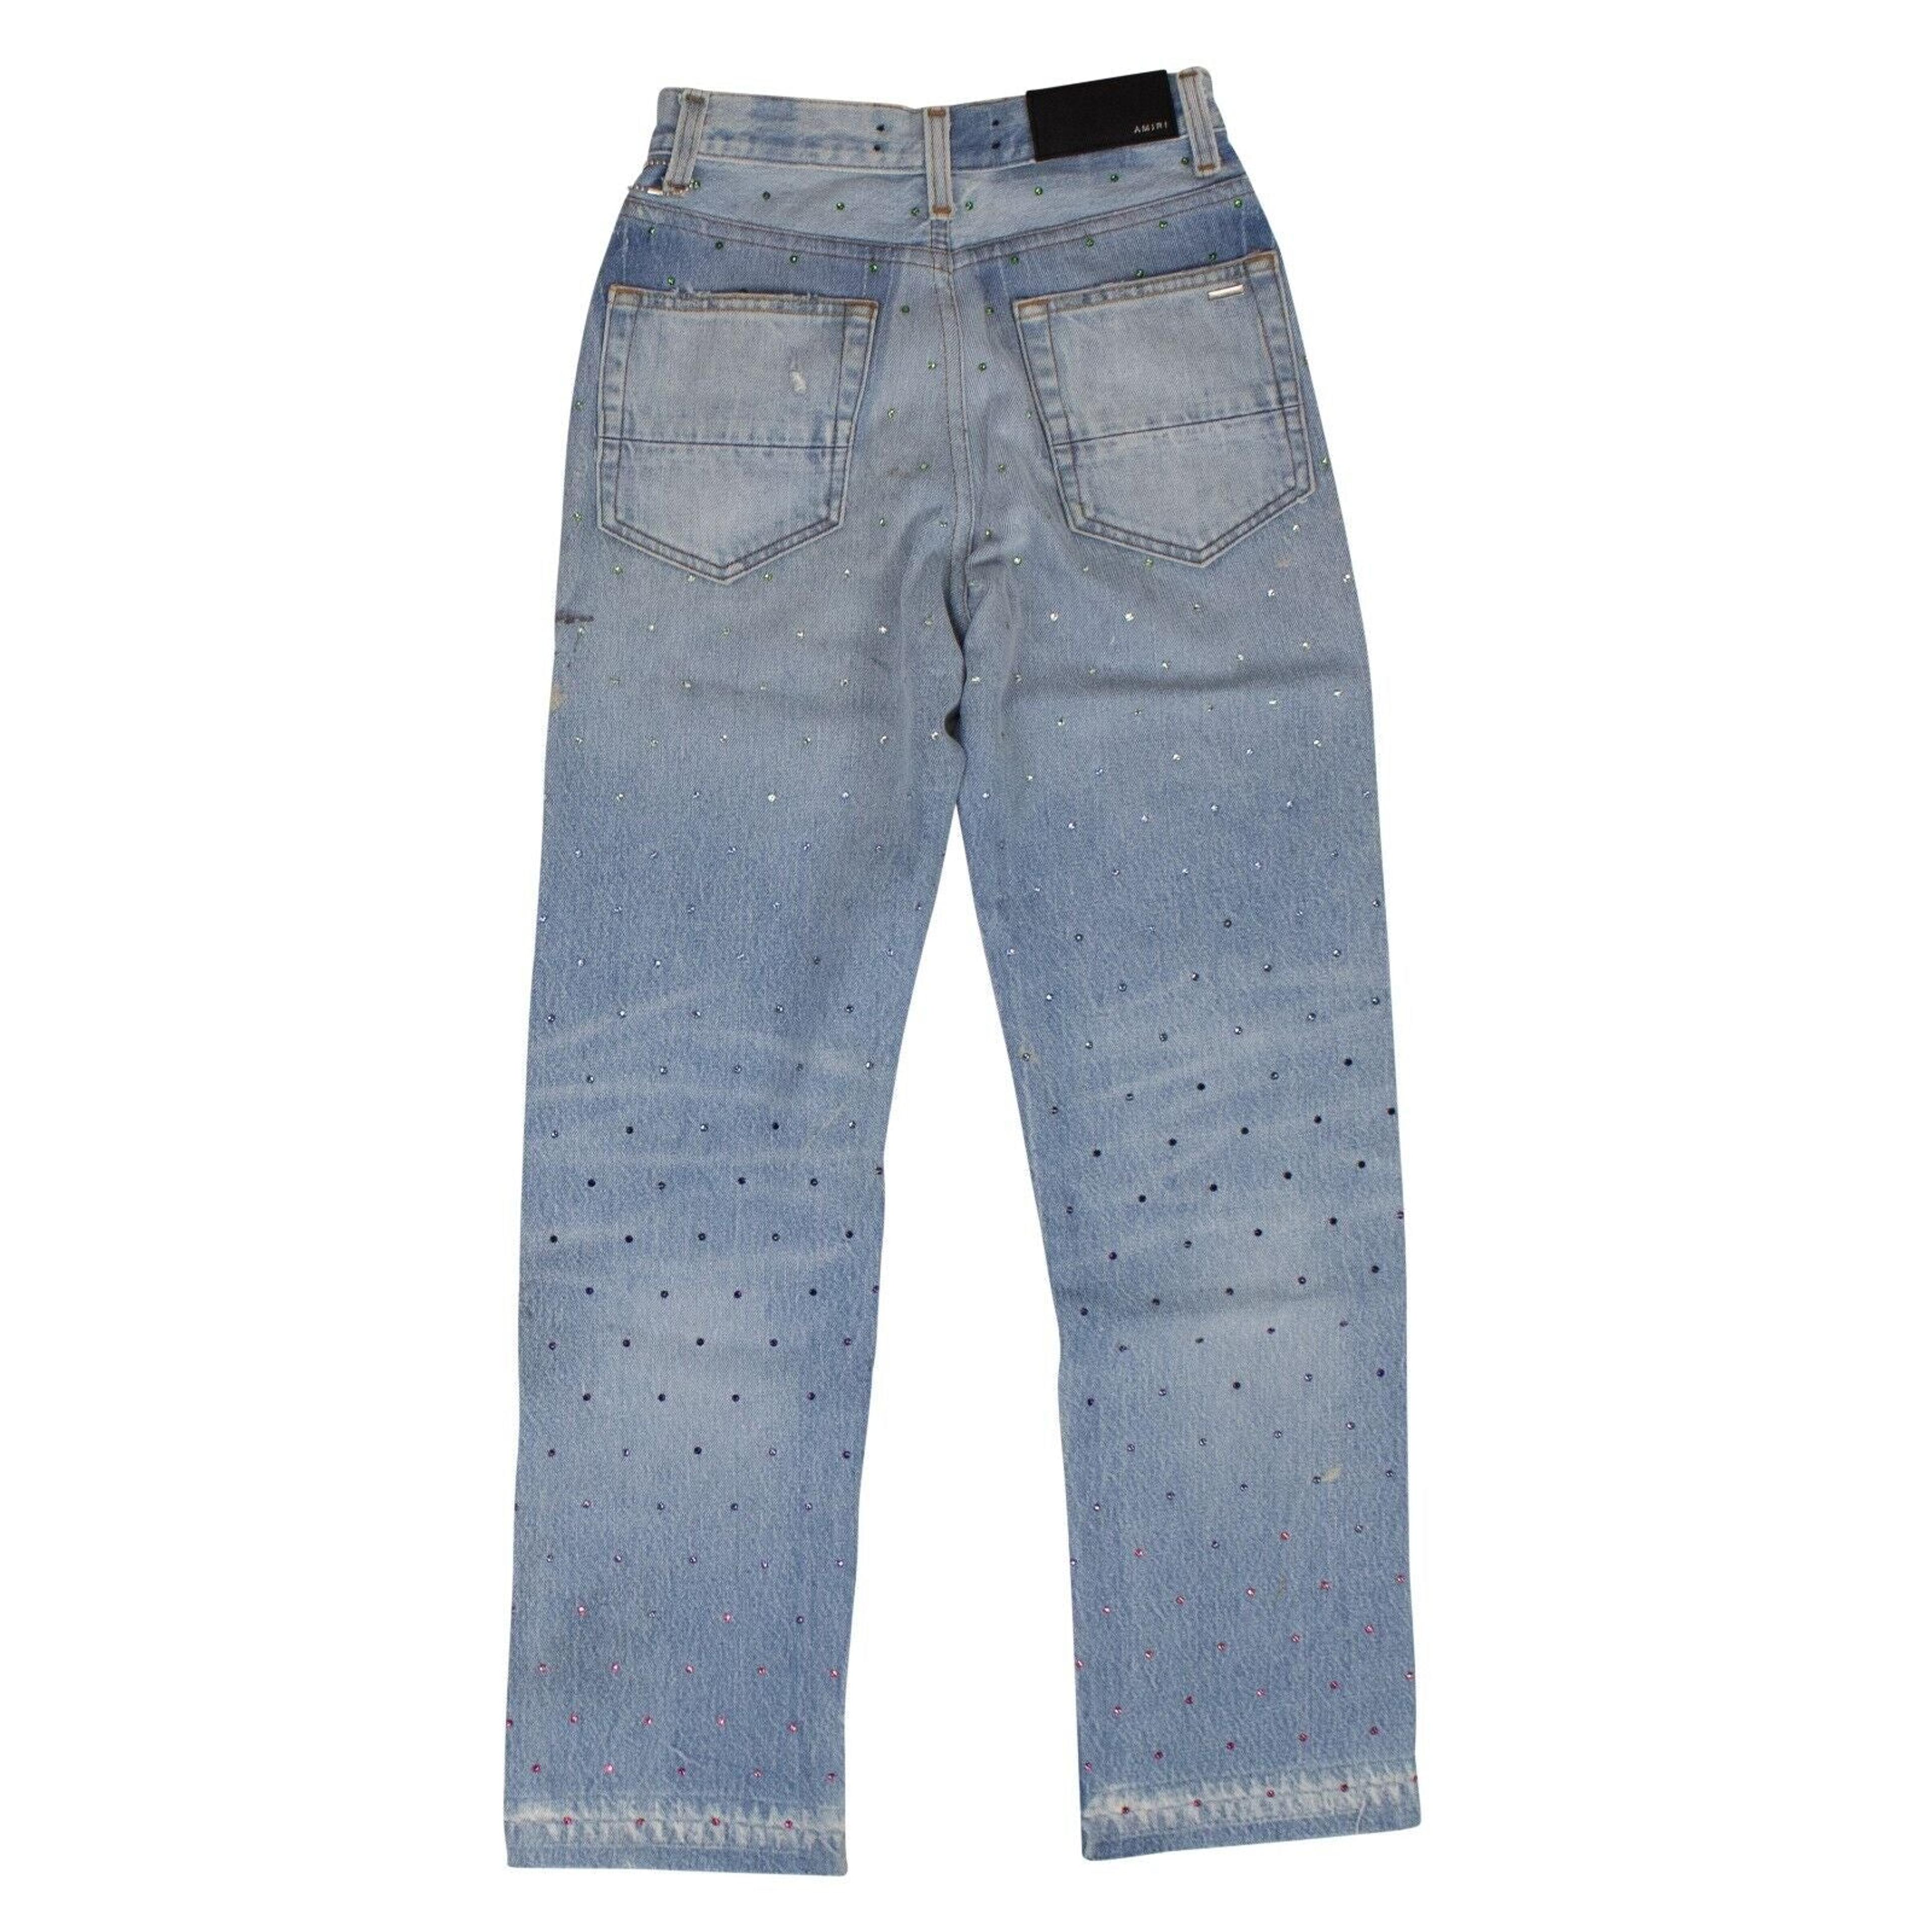 Alternate View 2 of Blue Gradient Crystal Recon Denim Jeans